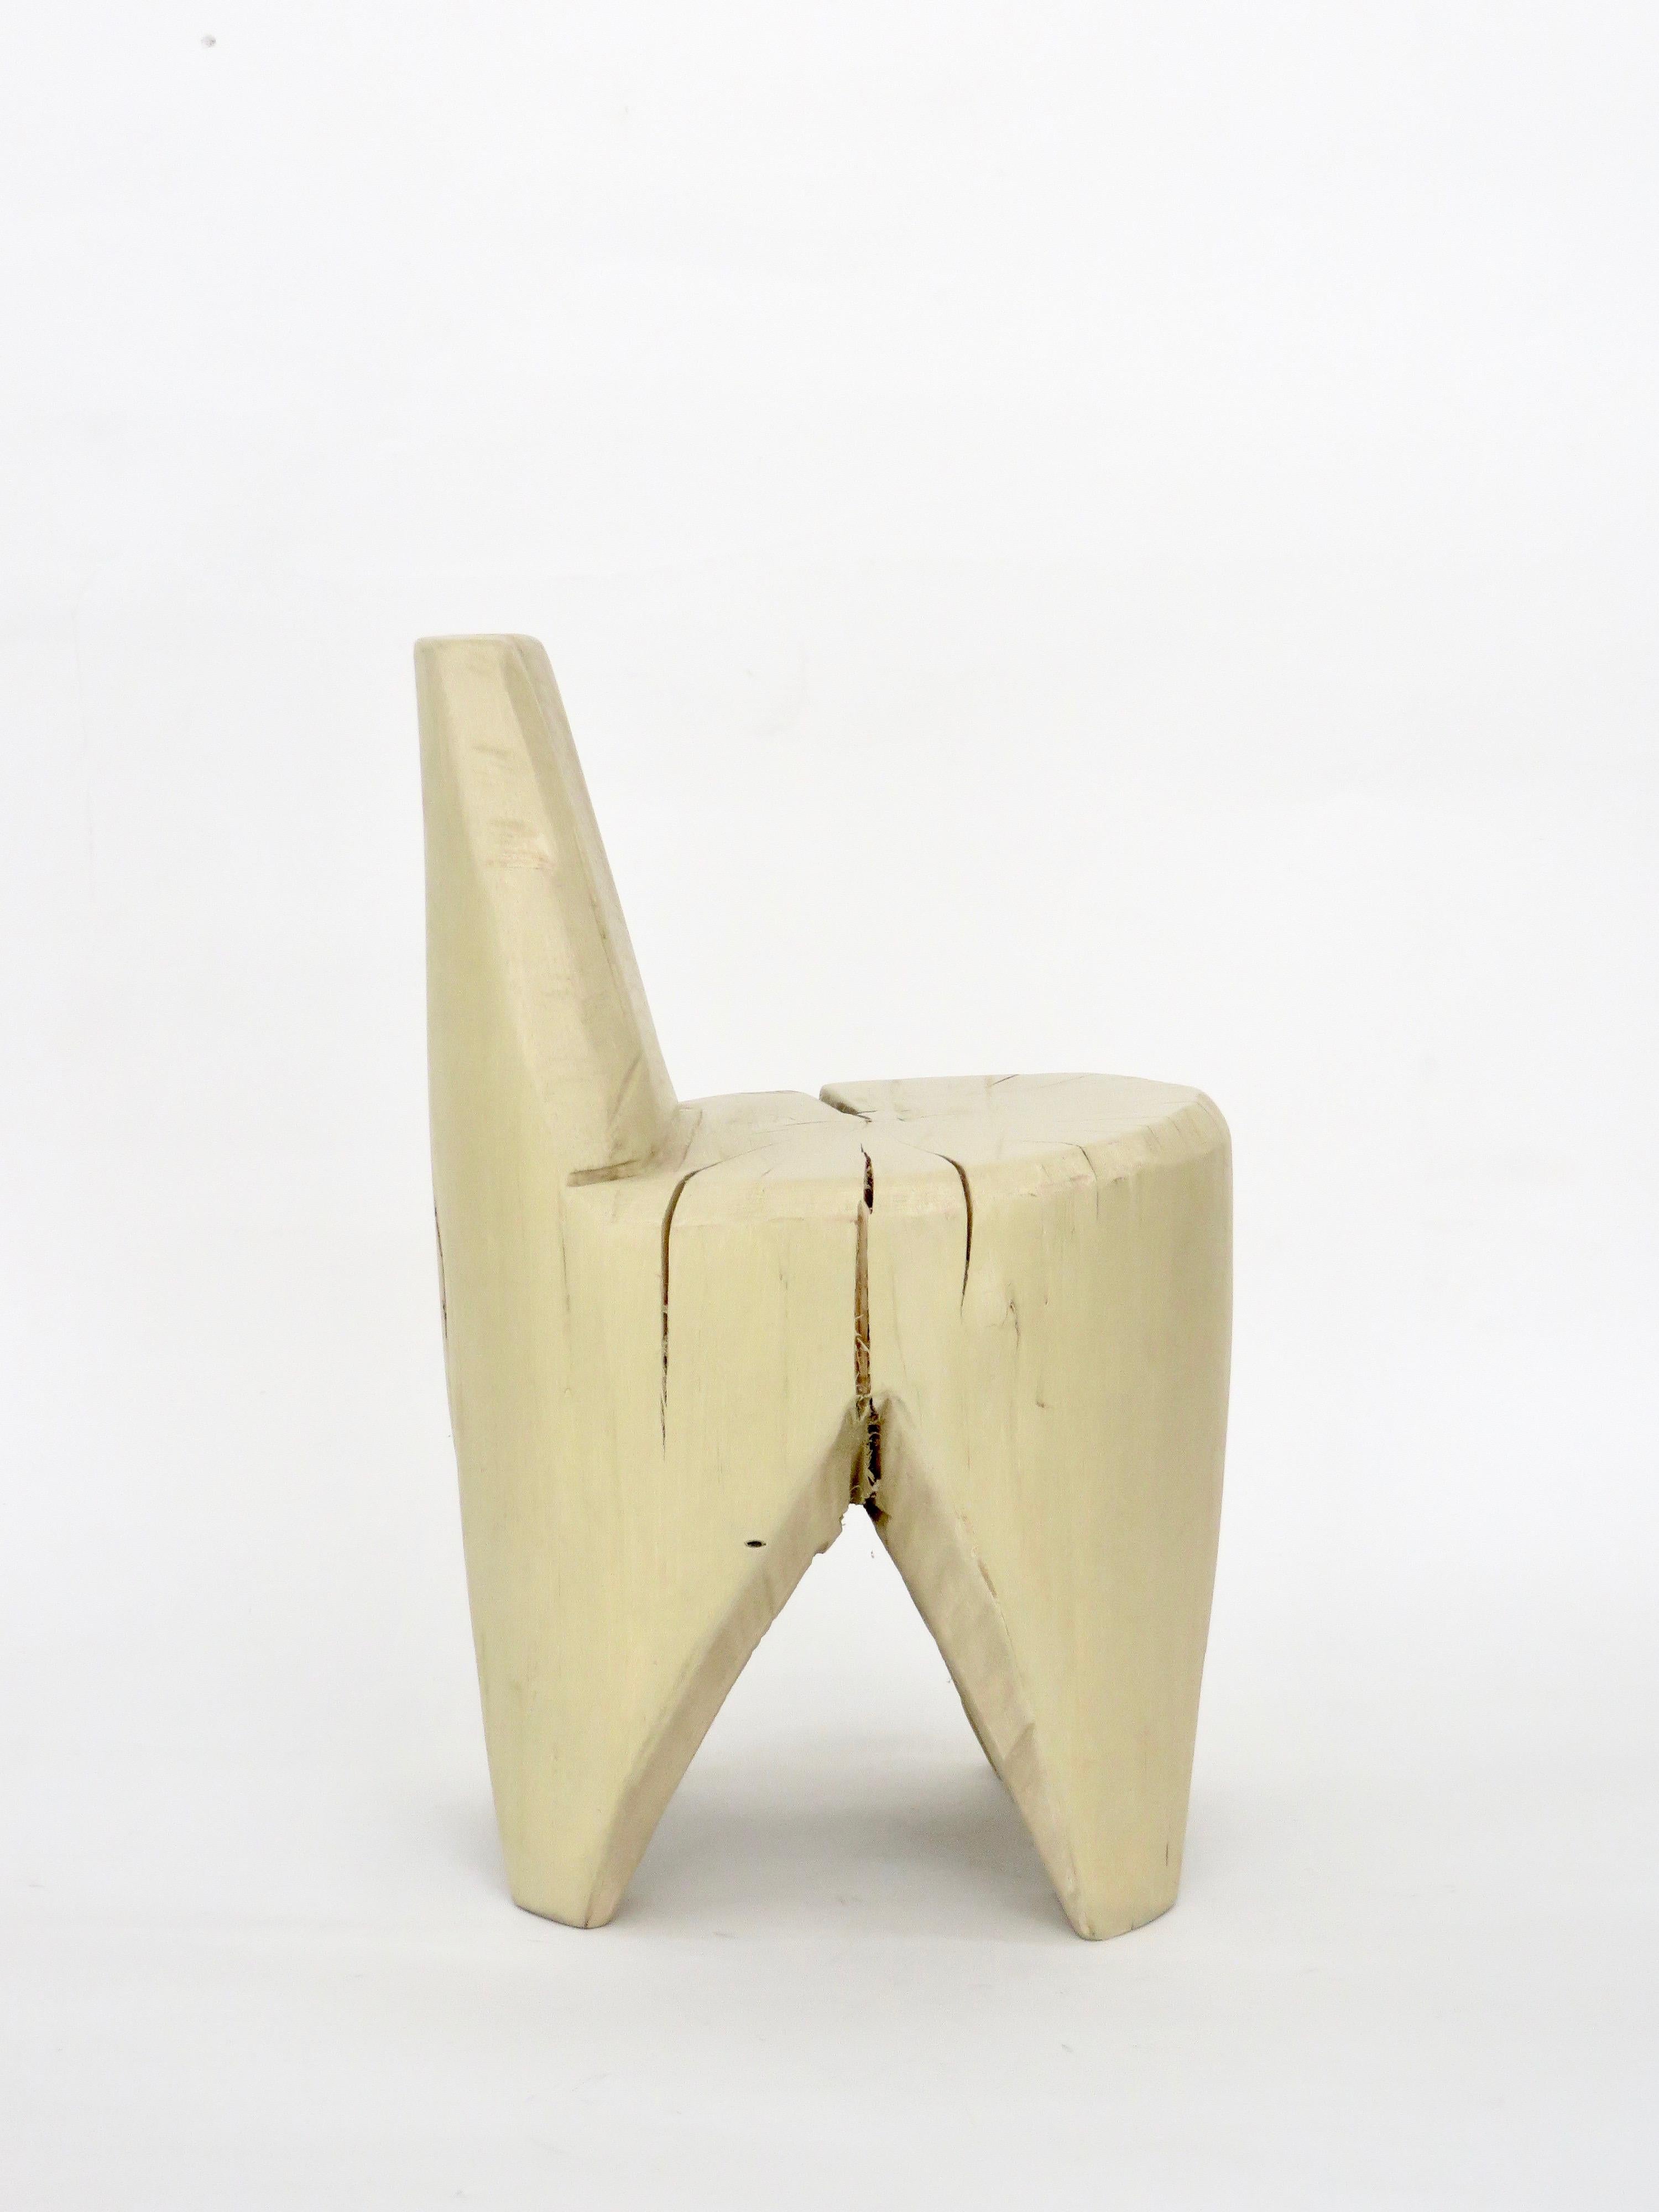 Modern Hannah Vaughan Contemporary Carved Sculptural Chair, 2019